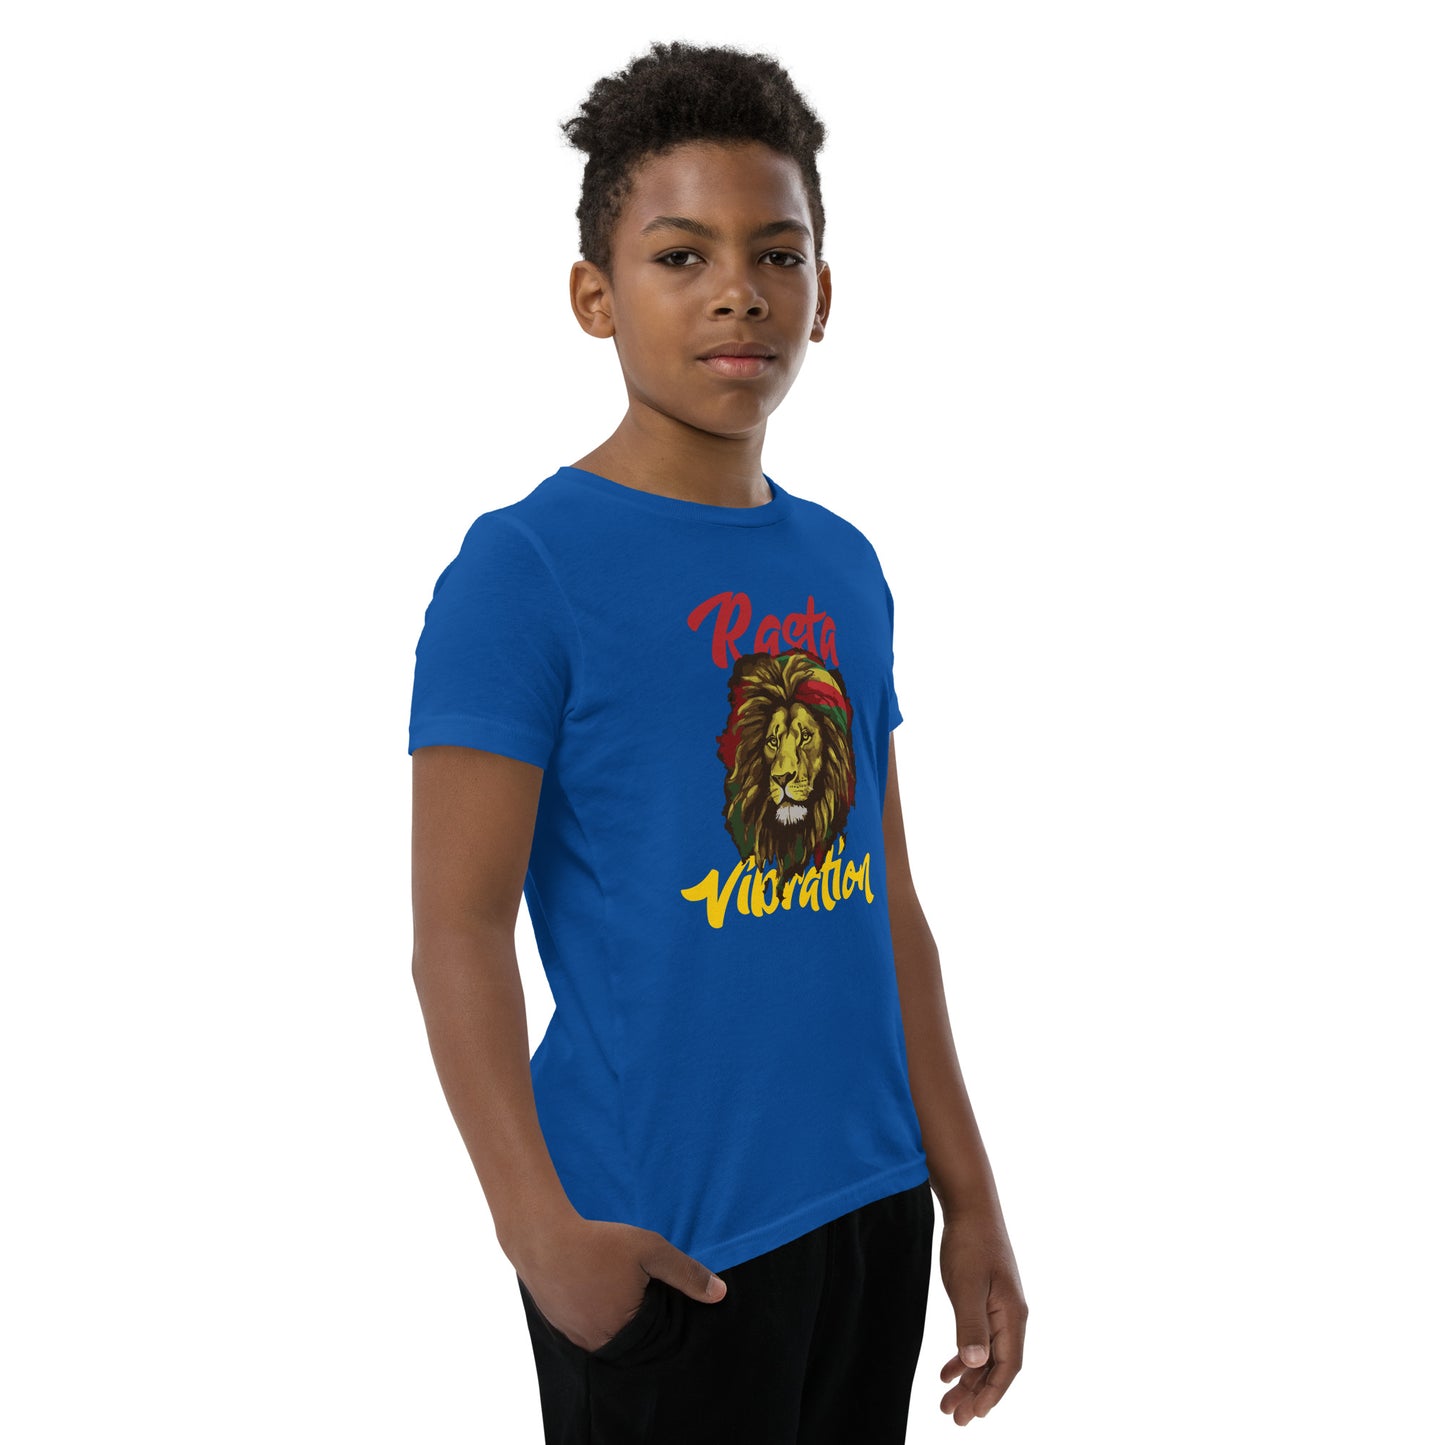 Youth Short Sleeve "Rasta Vibration" T-Shirt